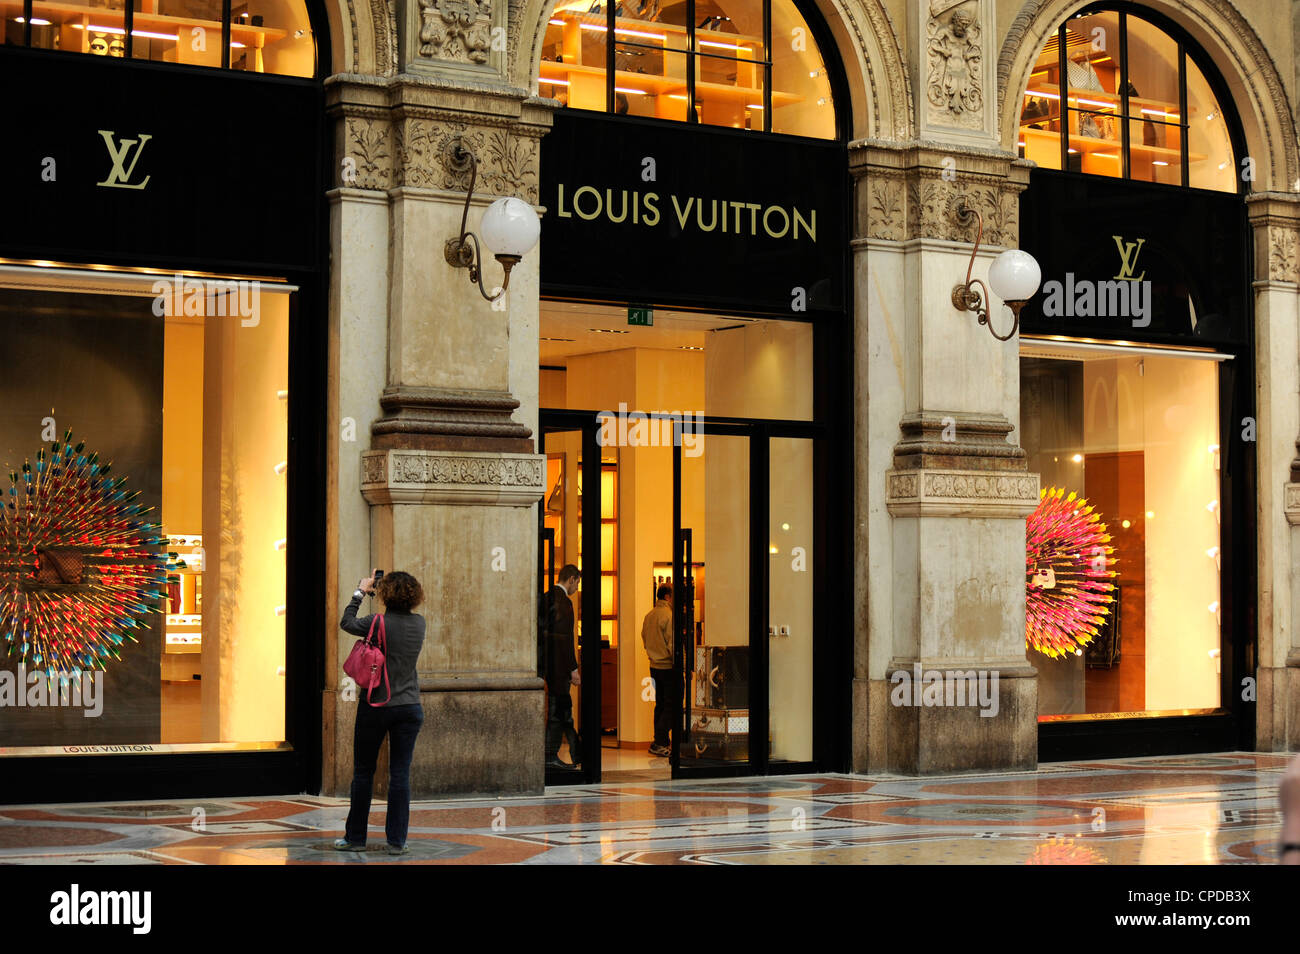 Louis Vuitton shop. Galleria Vittorio Emanuele II. Milan, Italy Stock Photo: 48237278 - Alamy